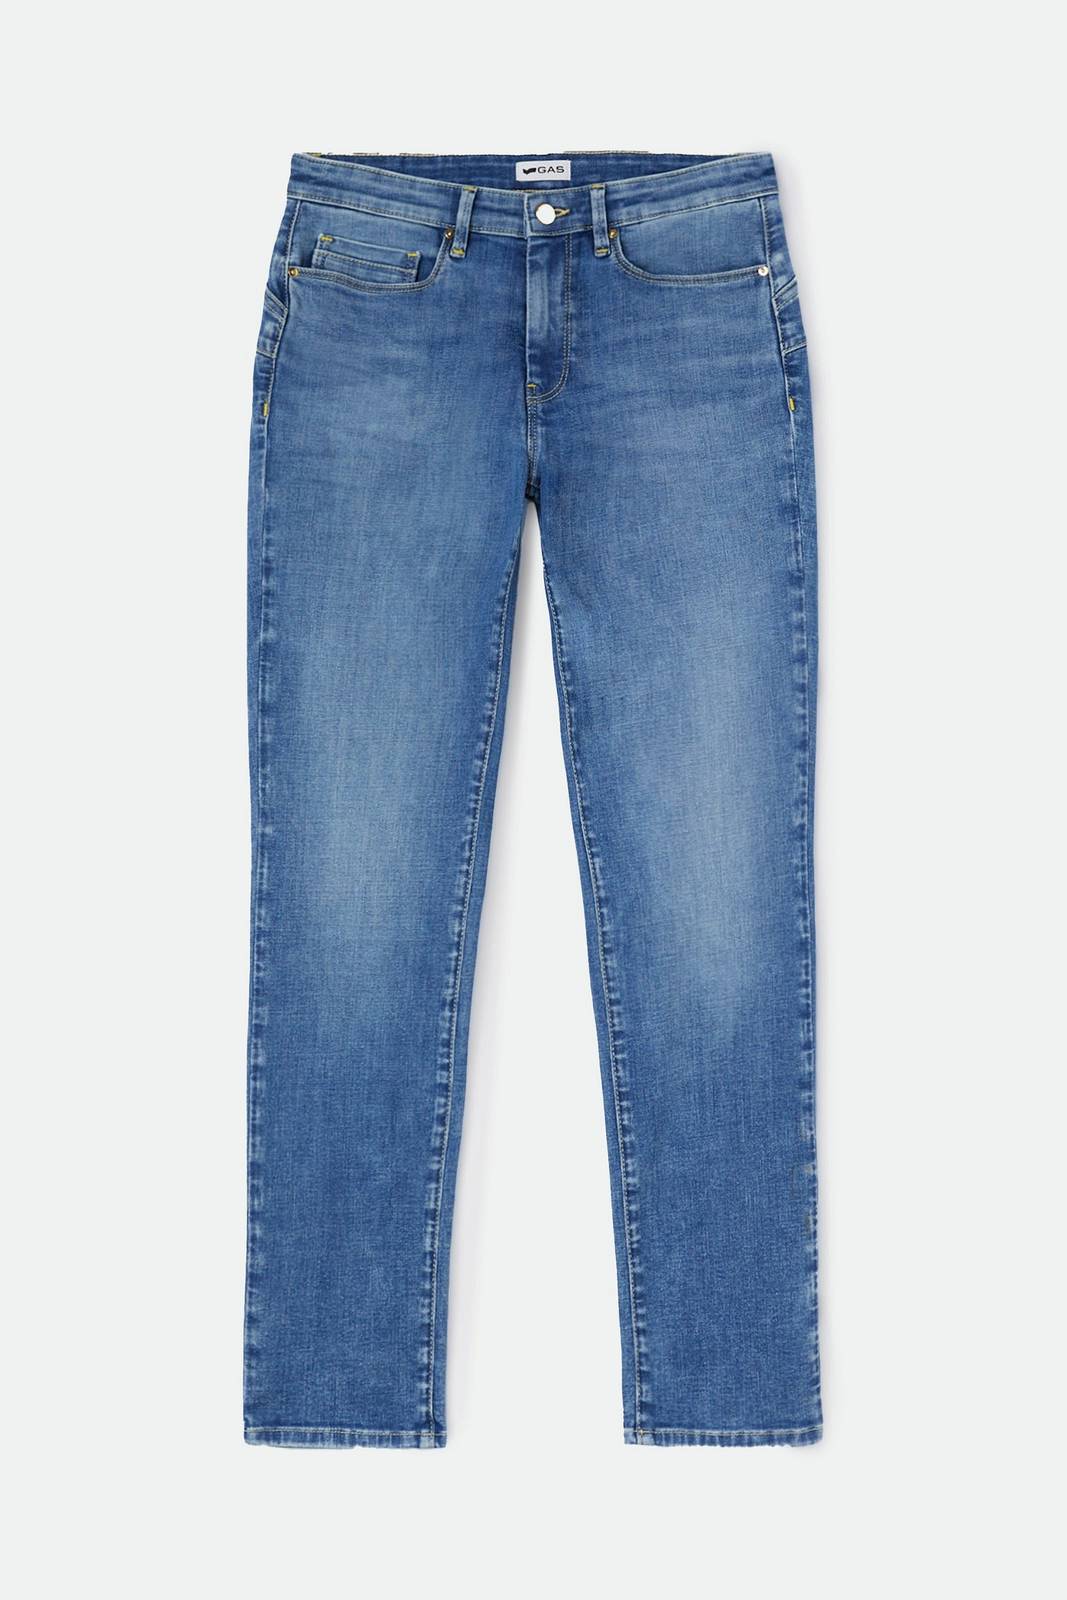 Image of Gas Jeans Denim Britty Up Z - Jeans Slim Fit A Vita Alta Jeans - Taglia 27-41